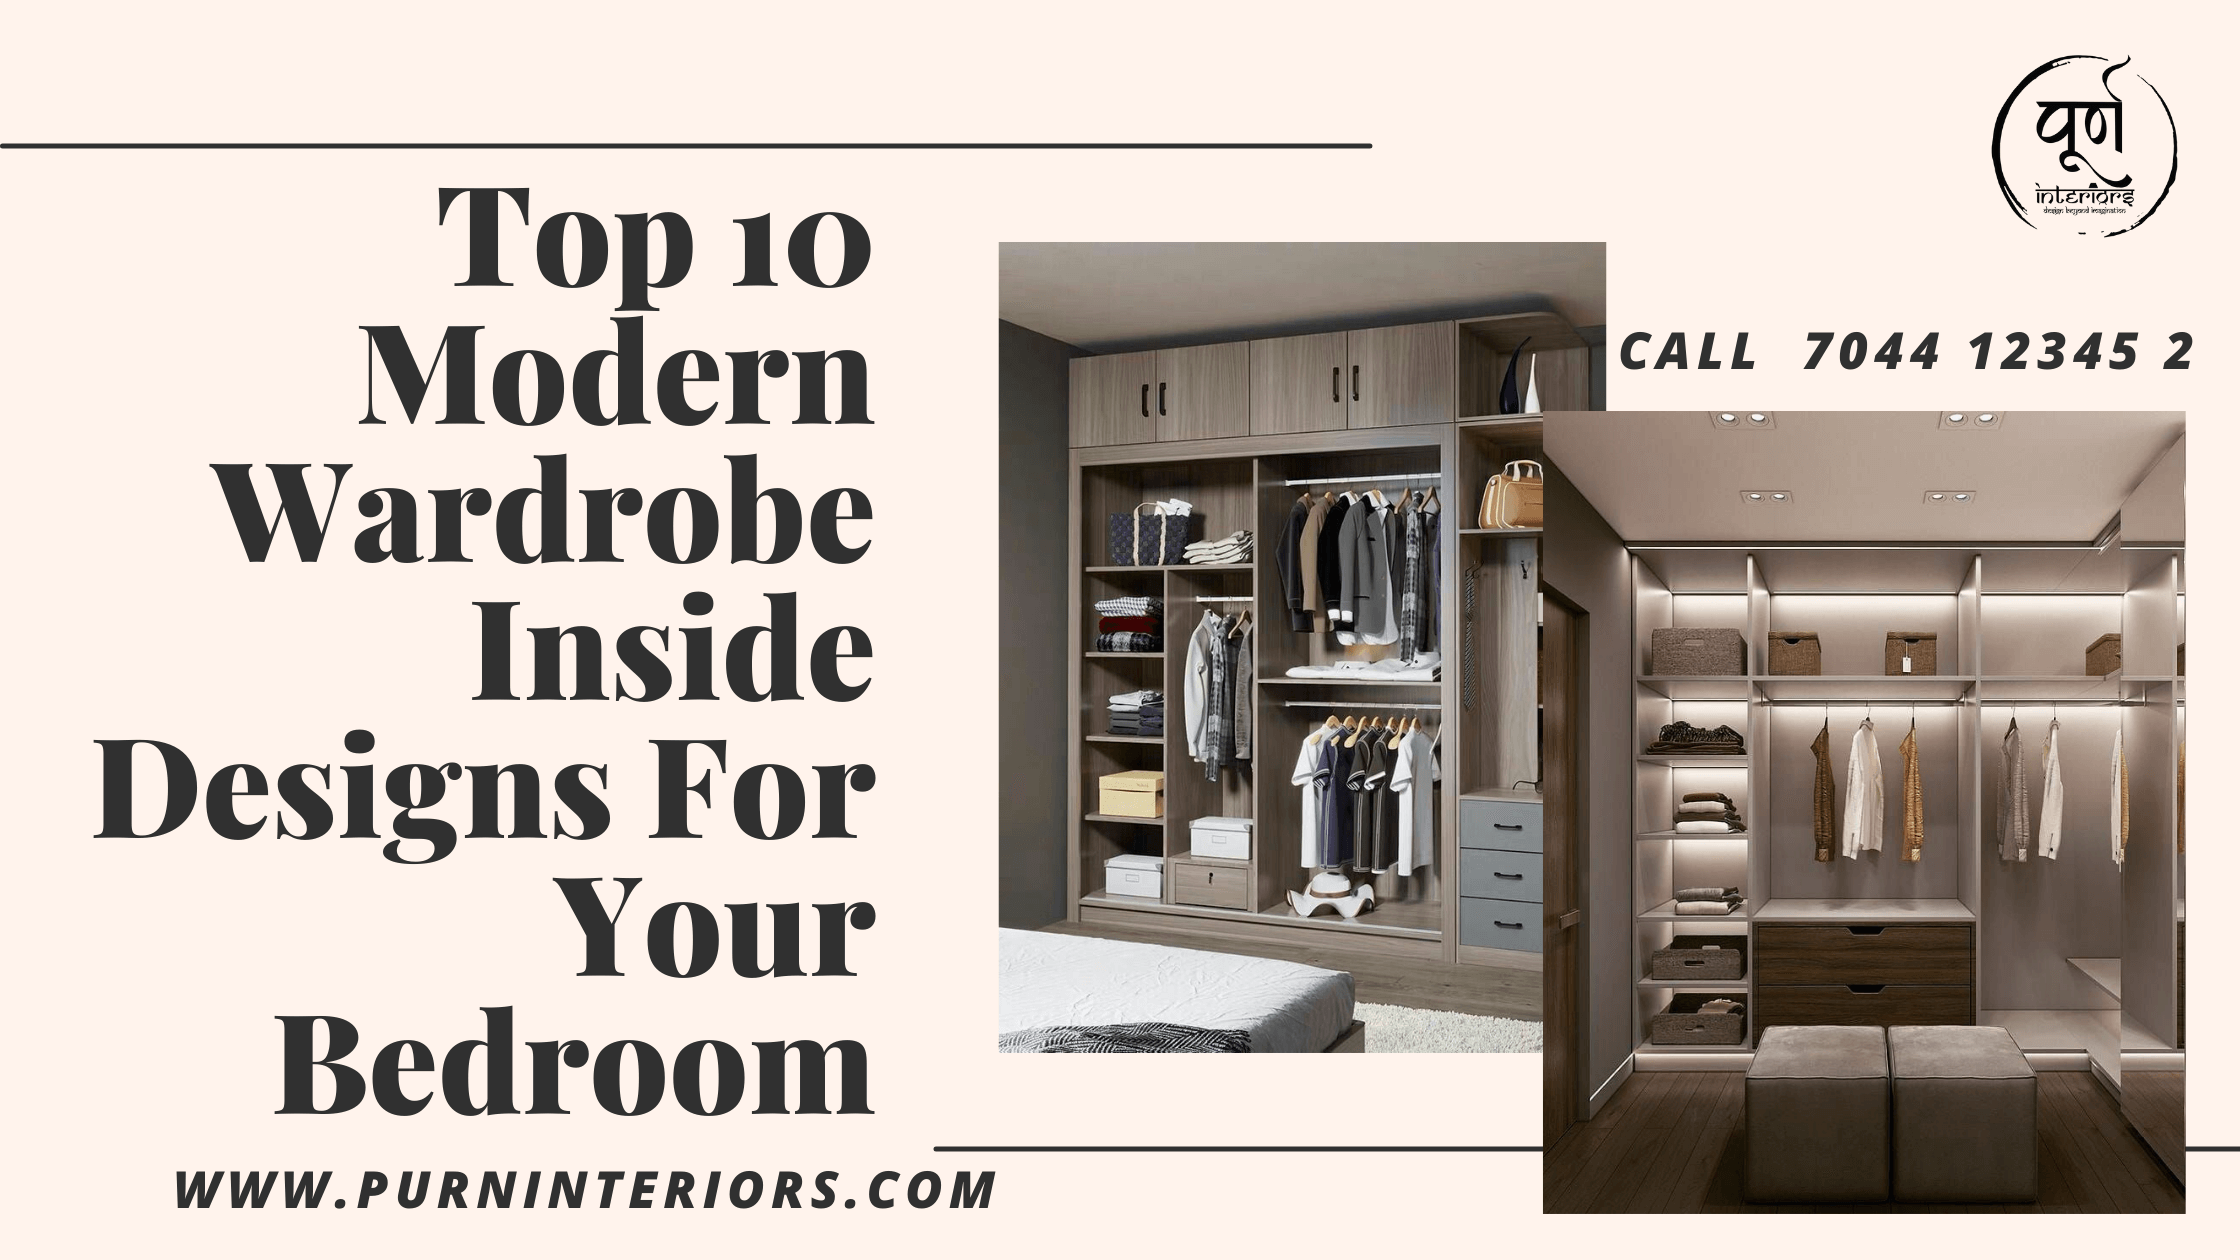 Top 10 Modern Wardrobe Inside Designs For Your Bedroom